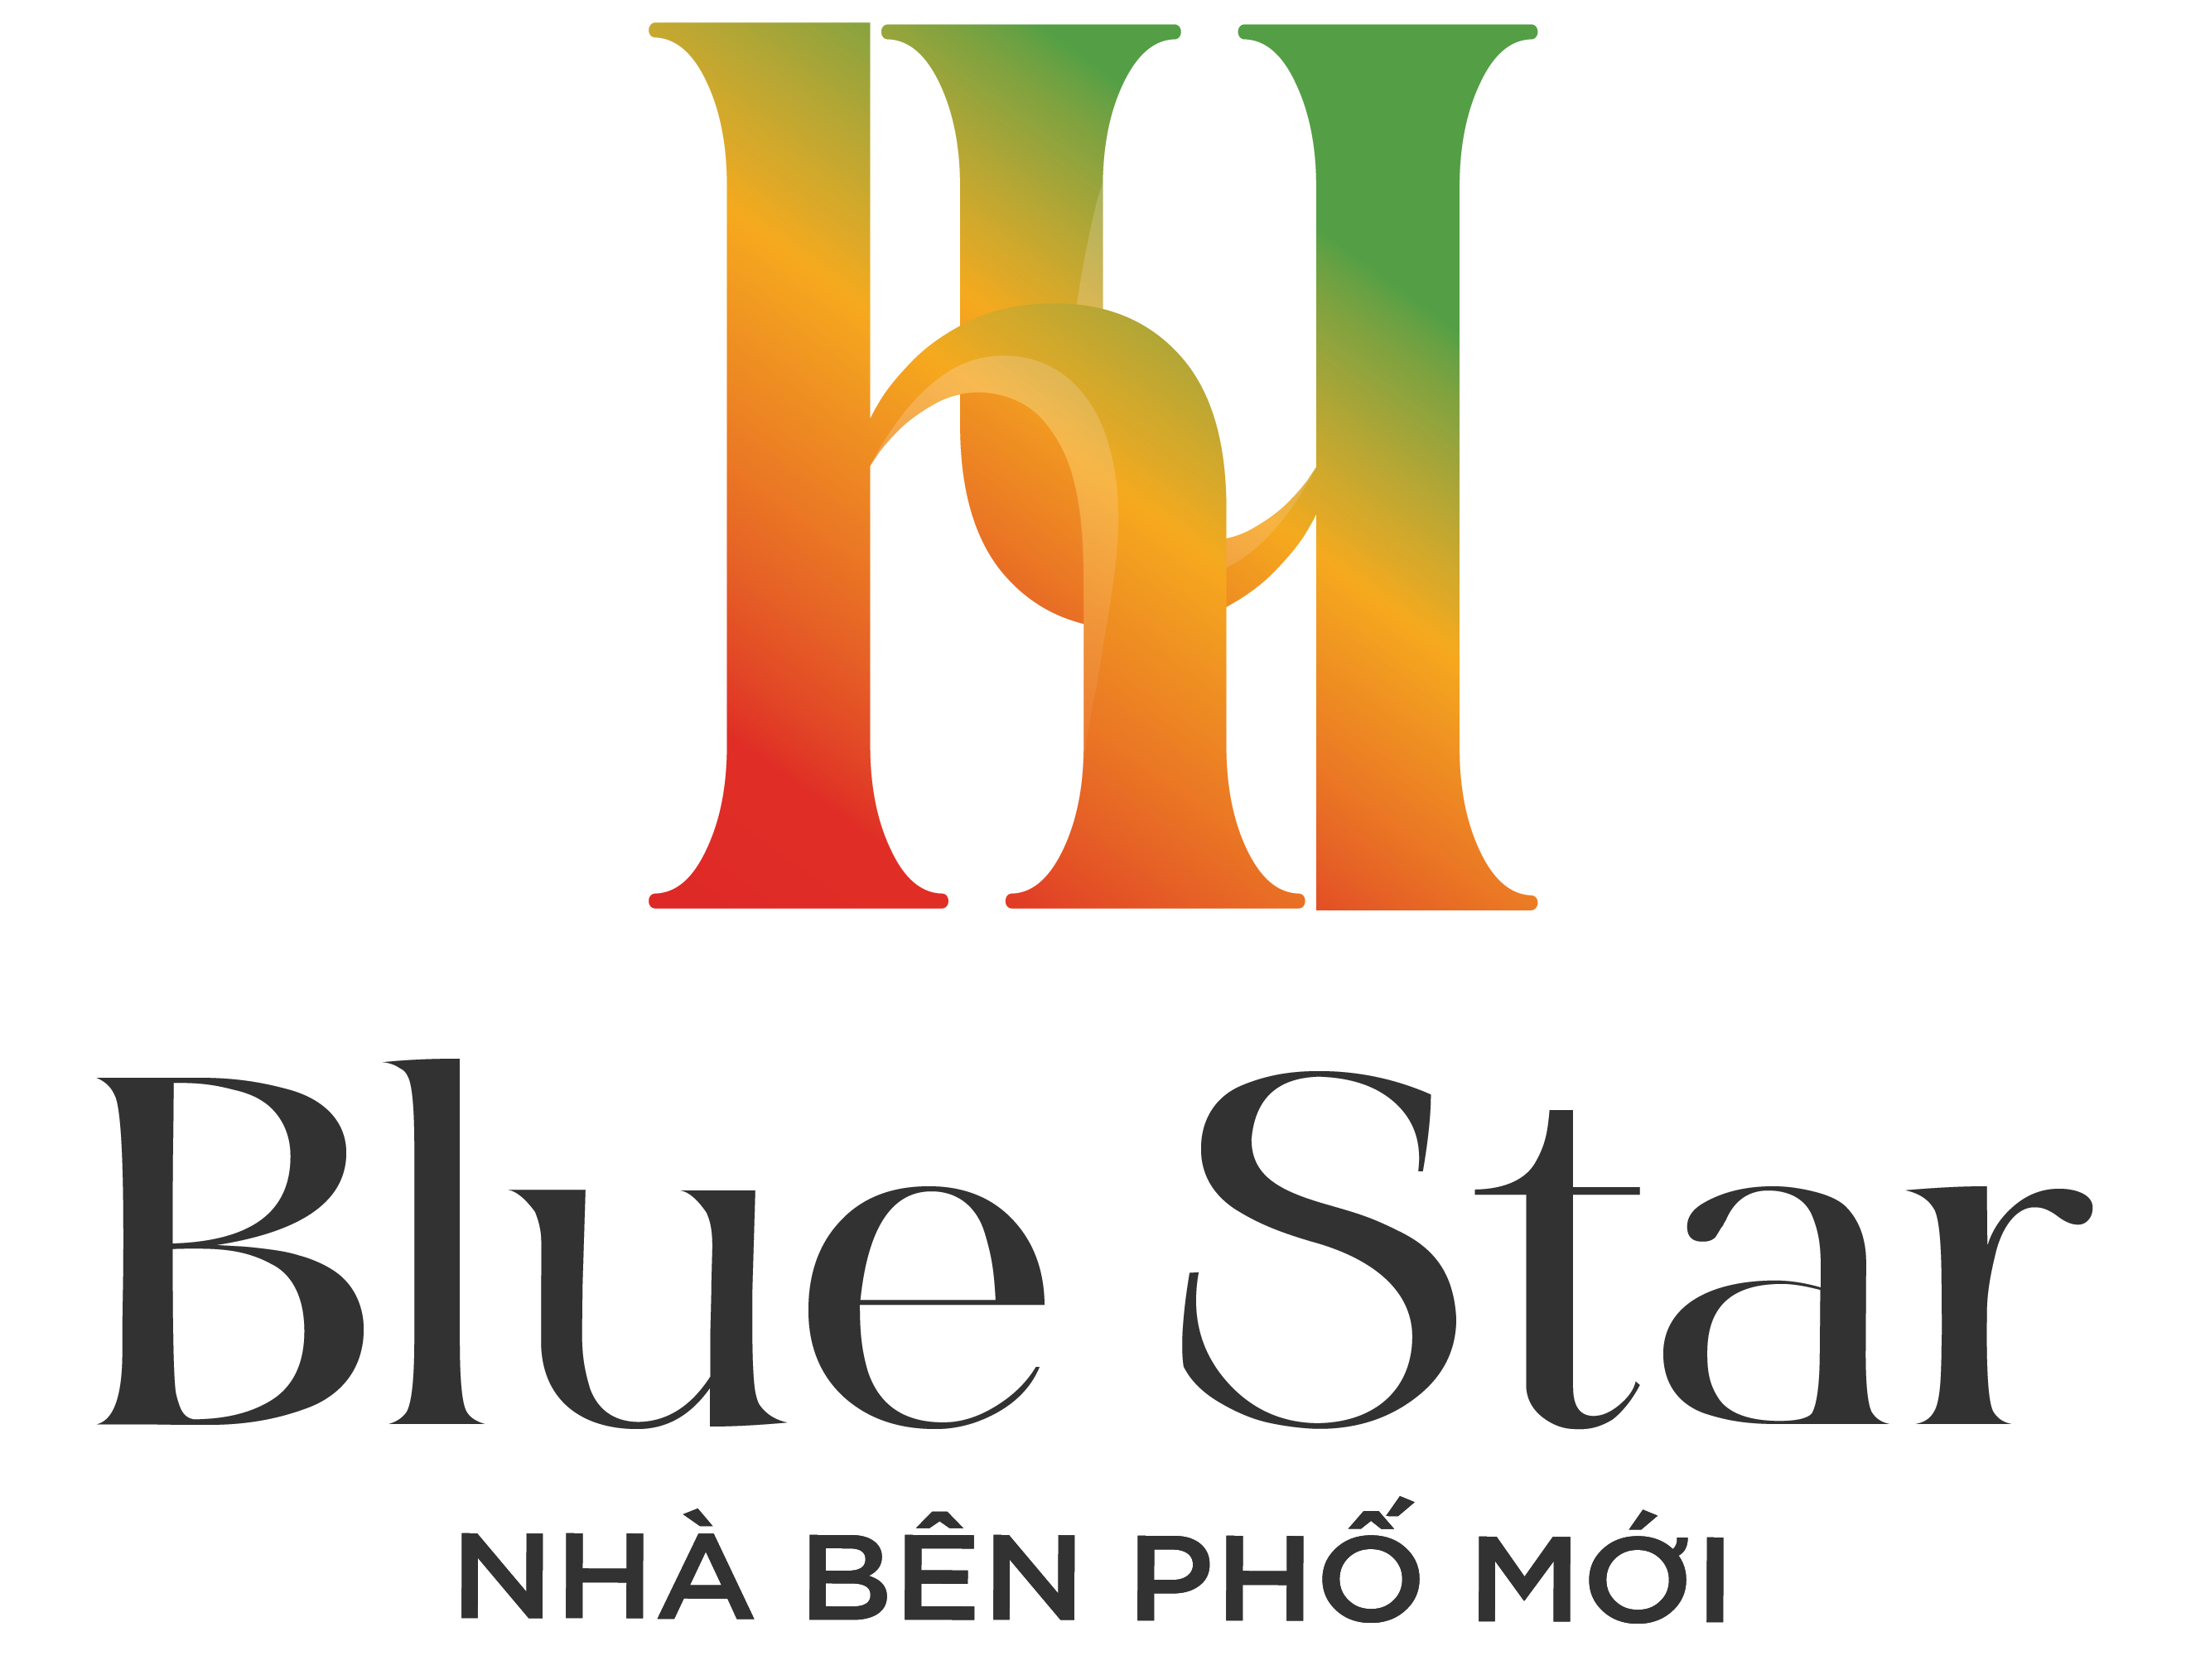 Hanhomes Blue Star